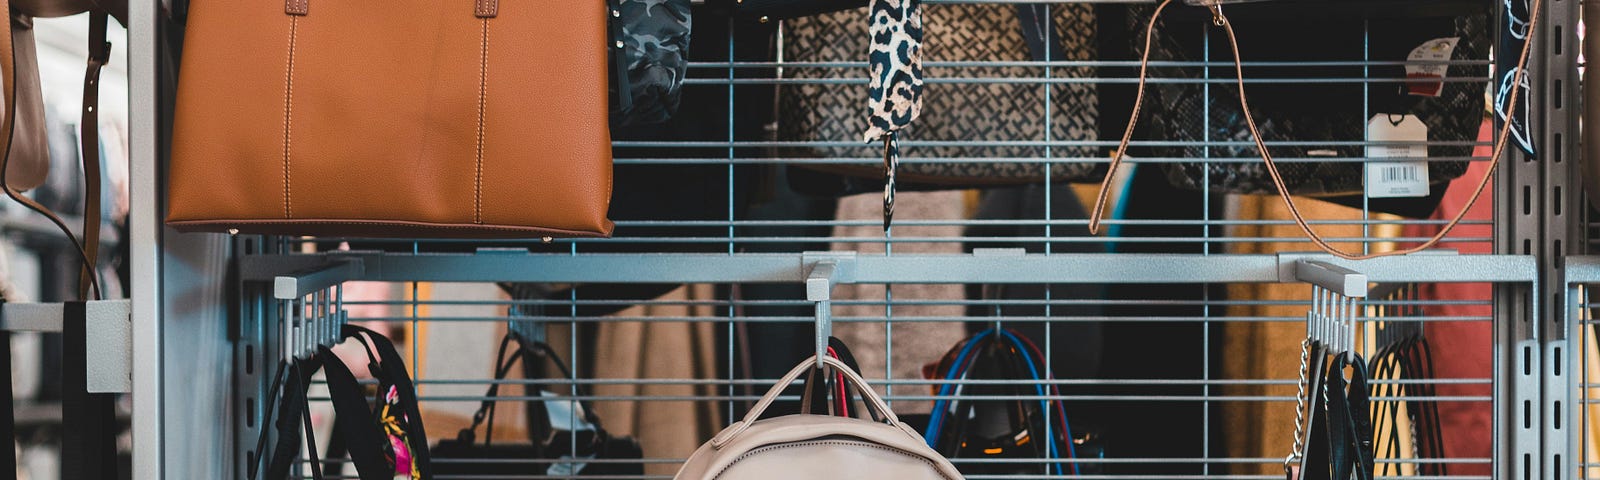 Many purses hang on a sales rack